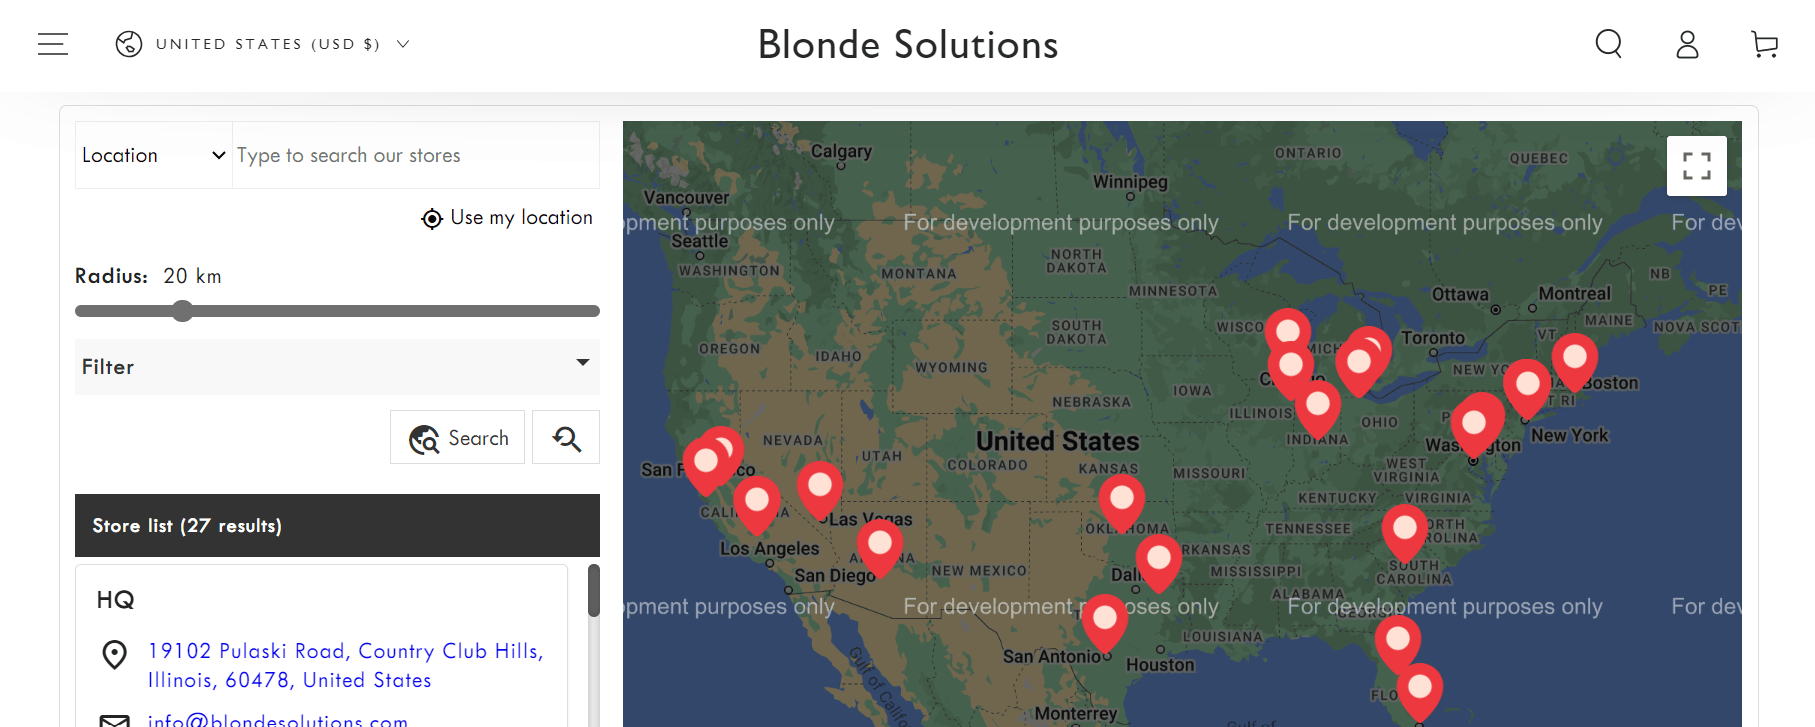 blonde-solutions-retailer-map